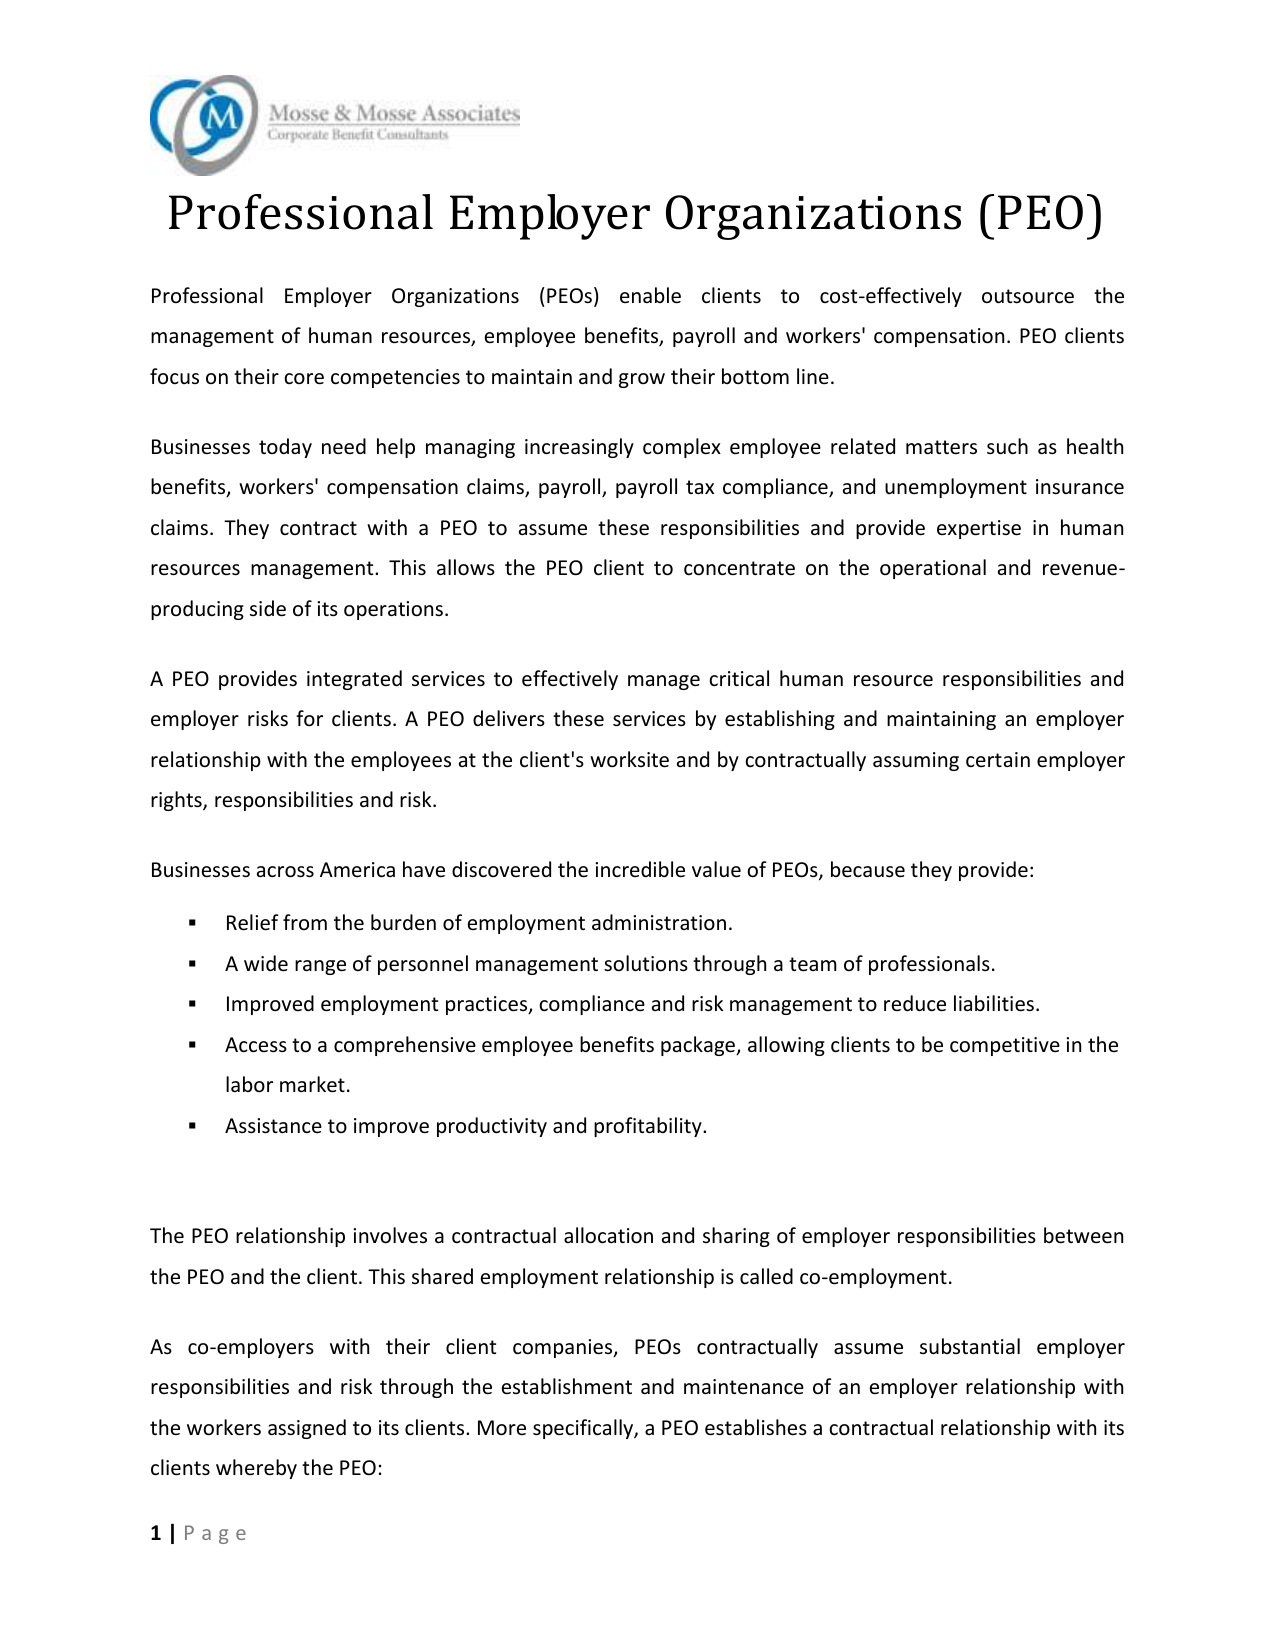 Professional Employer Organizations Peo